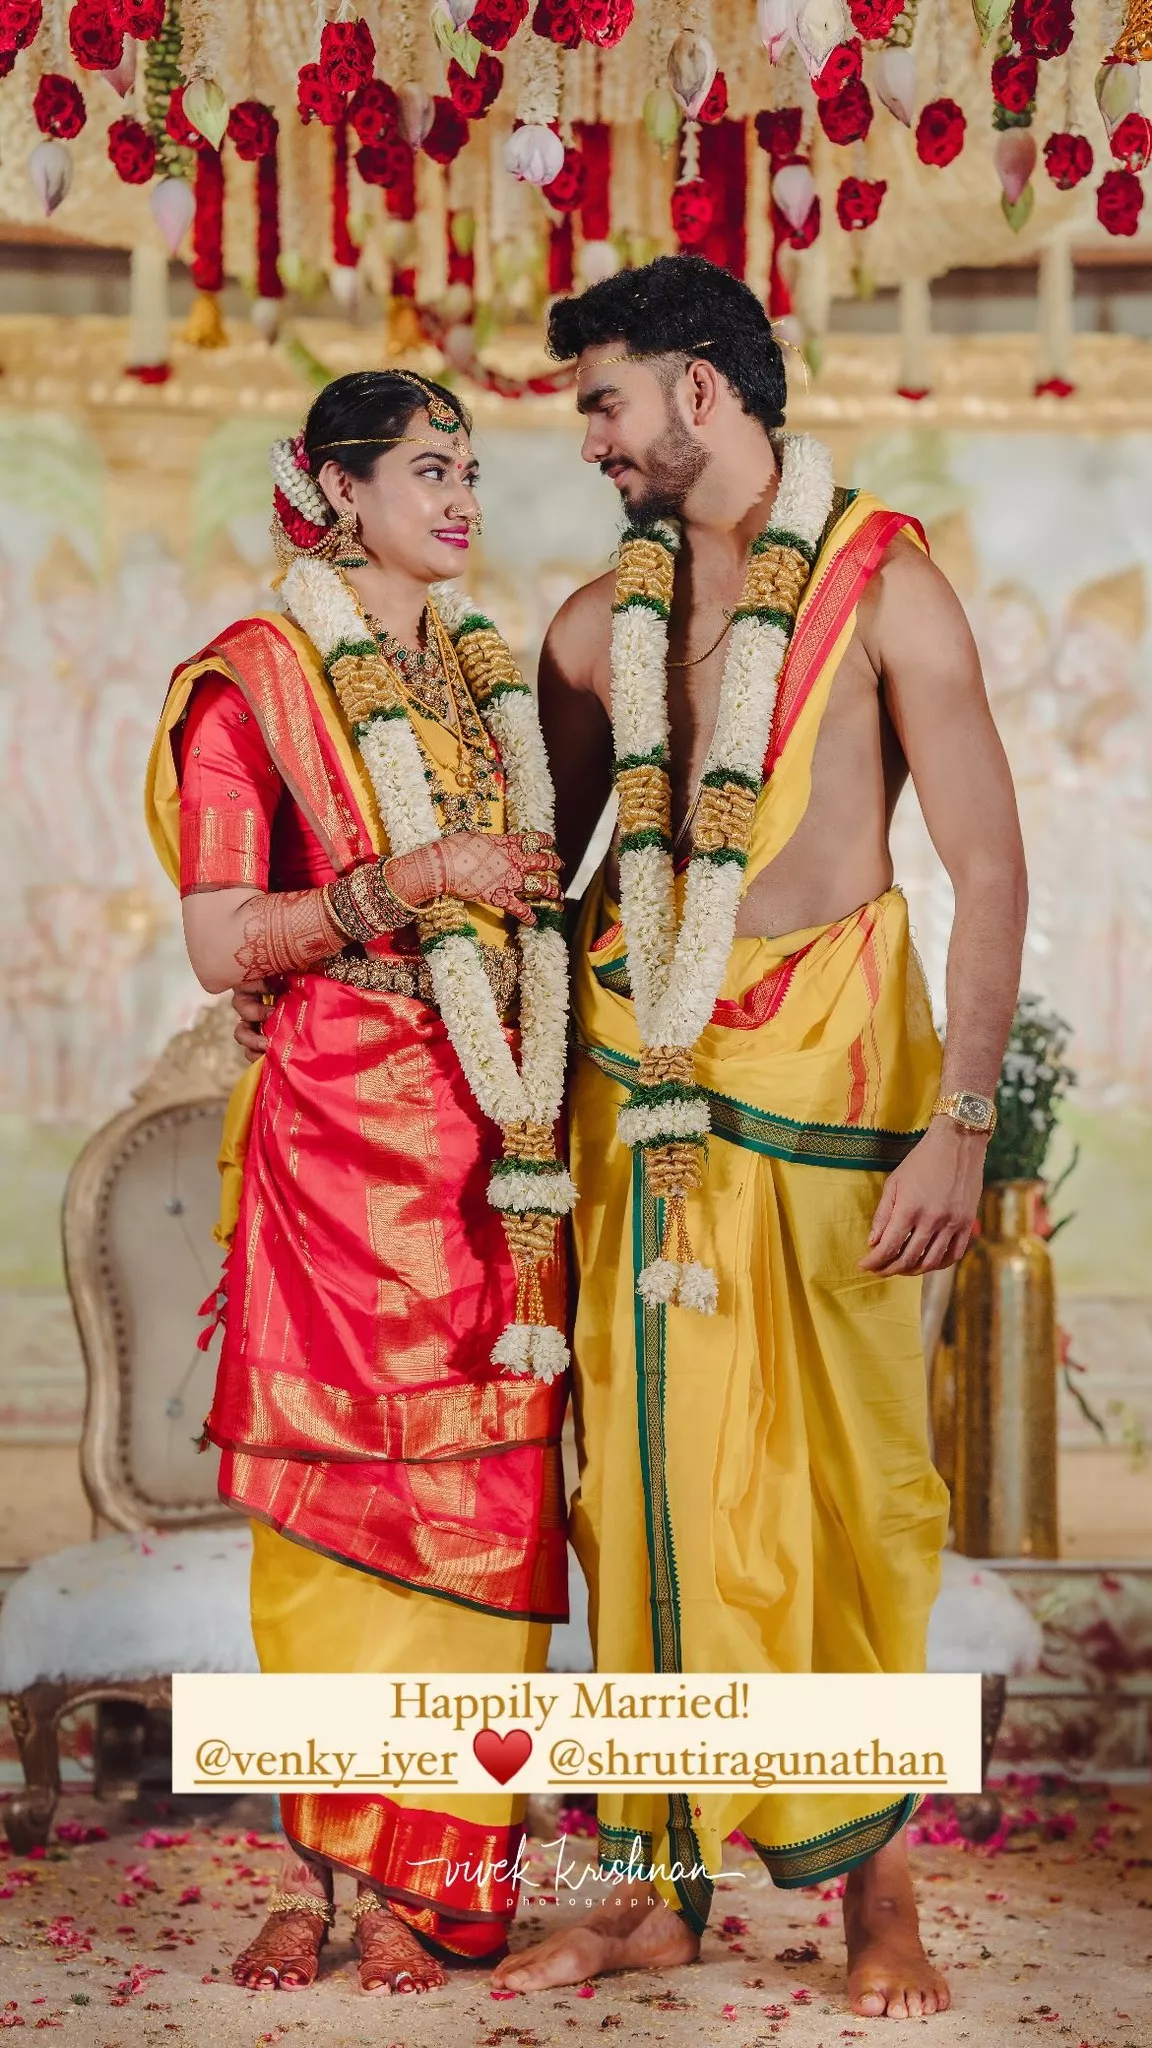 venkatesh iyer gets married to shruti raghunathan